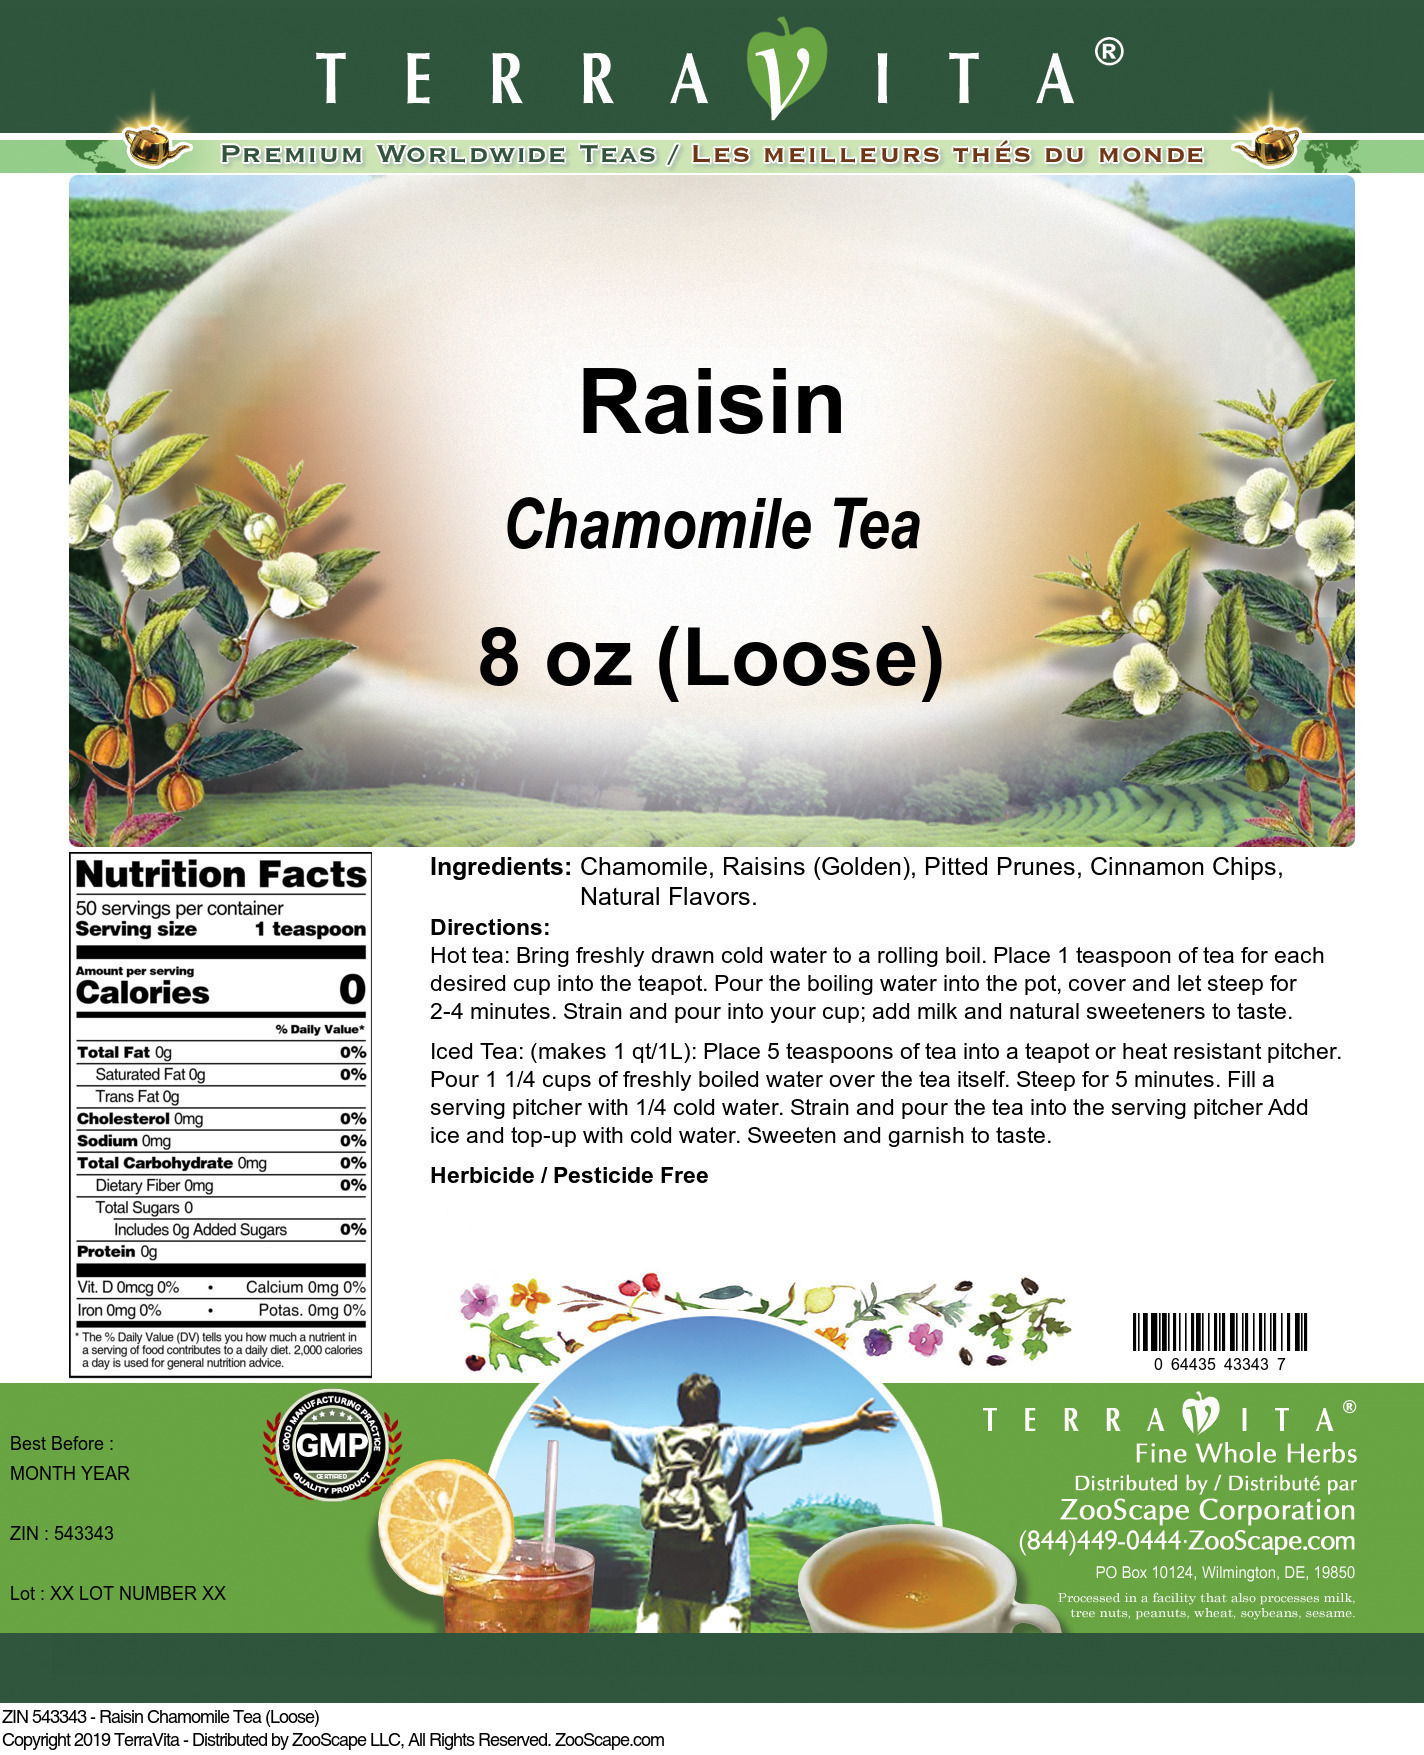 Raisin Chamomile Tea (Loose) - Label